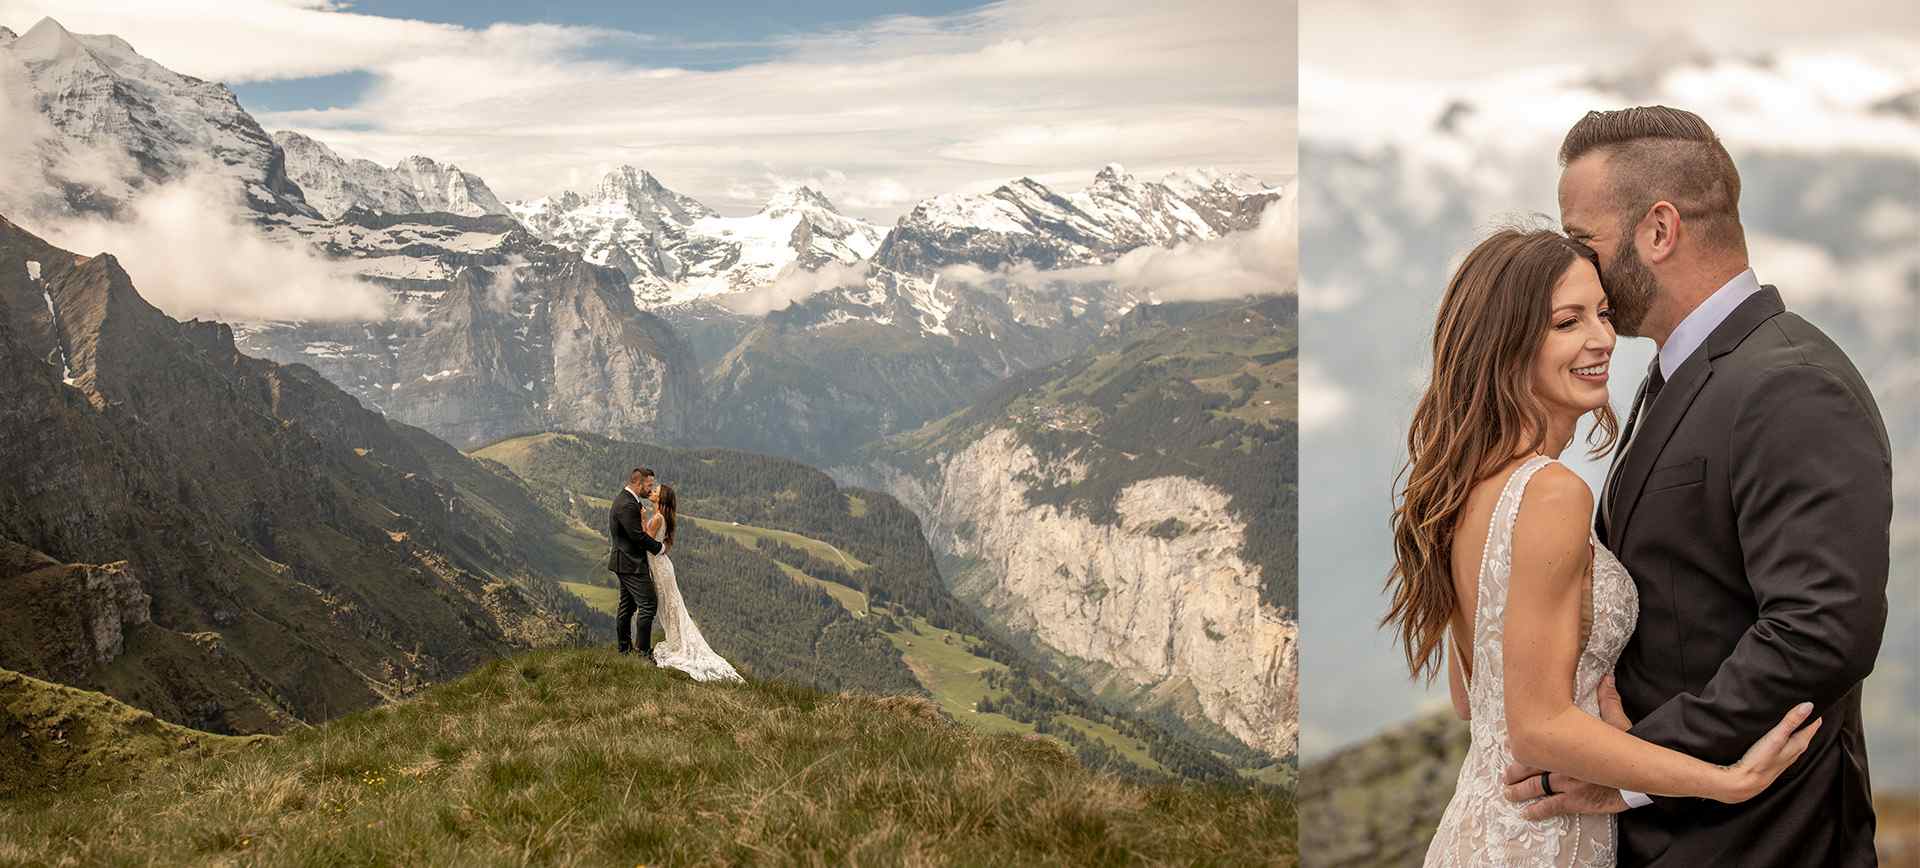 switzerland elopement package - mountain adventure wedding